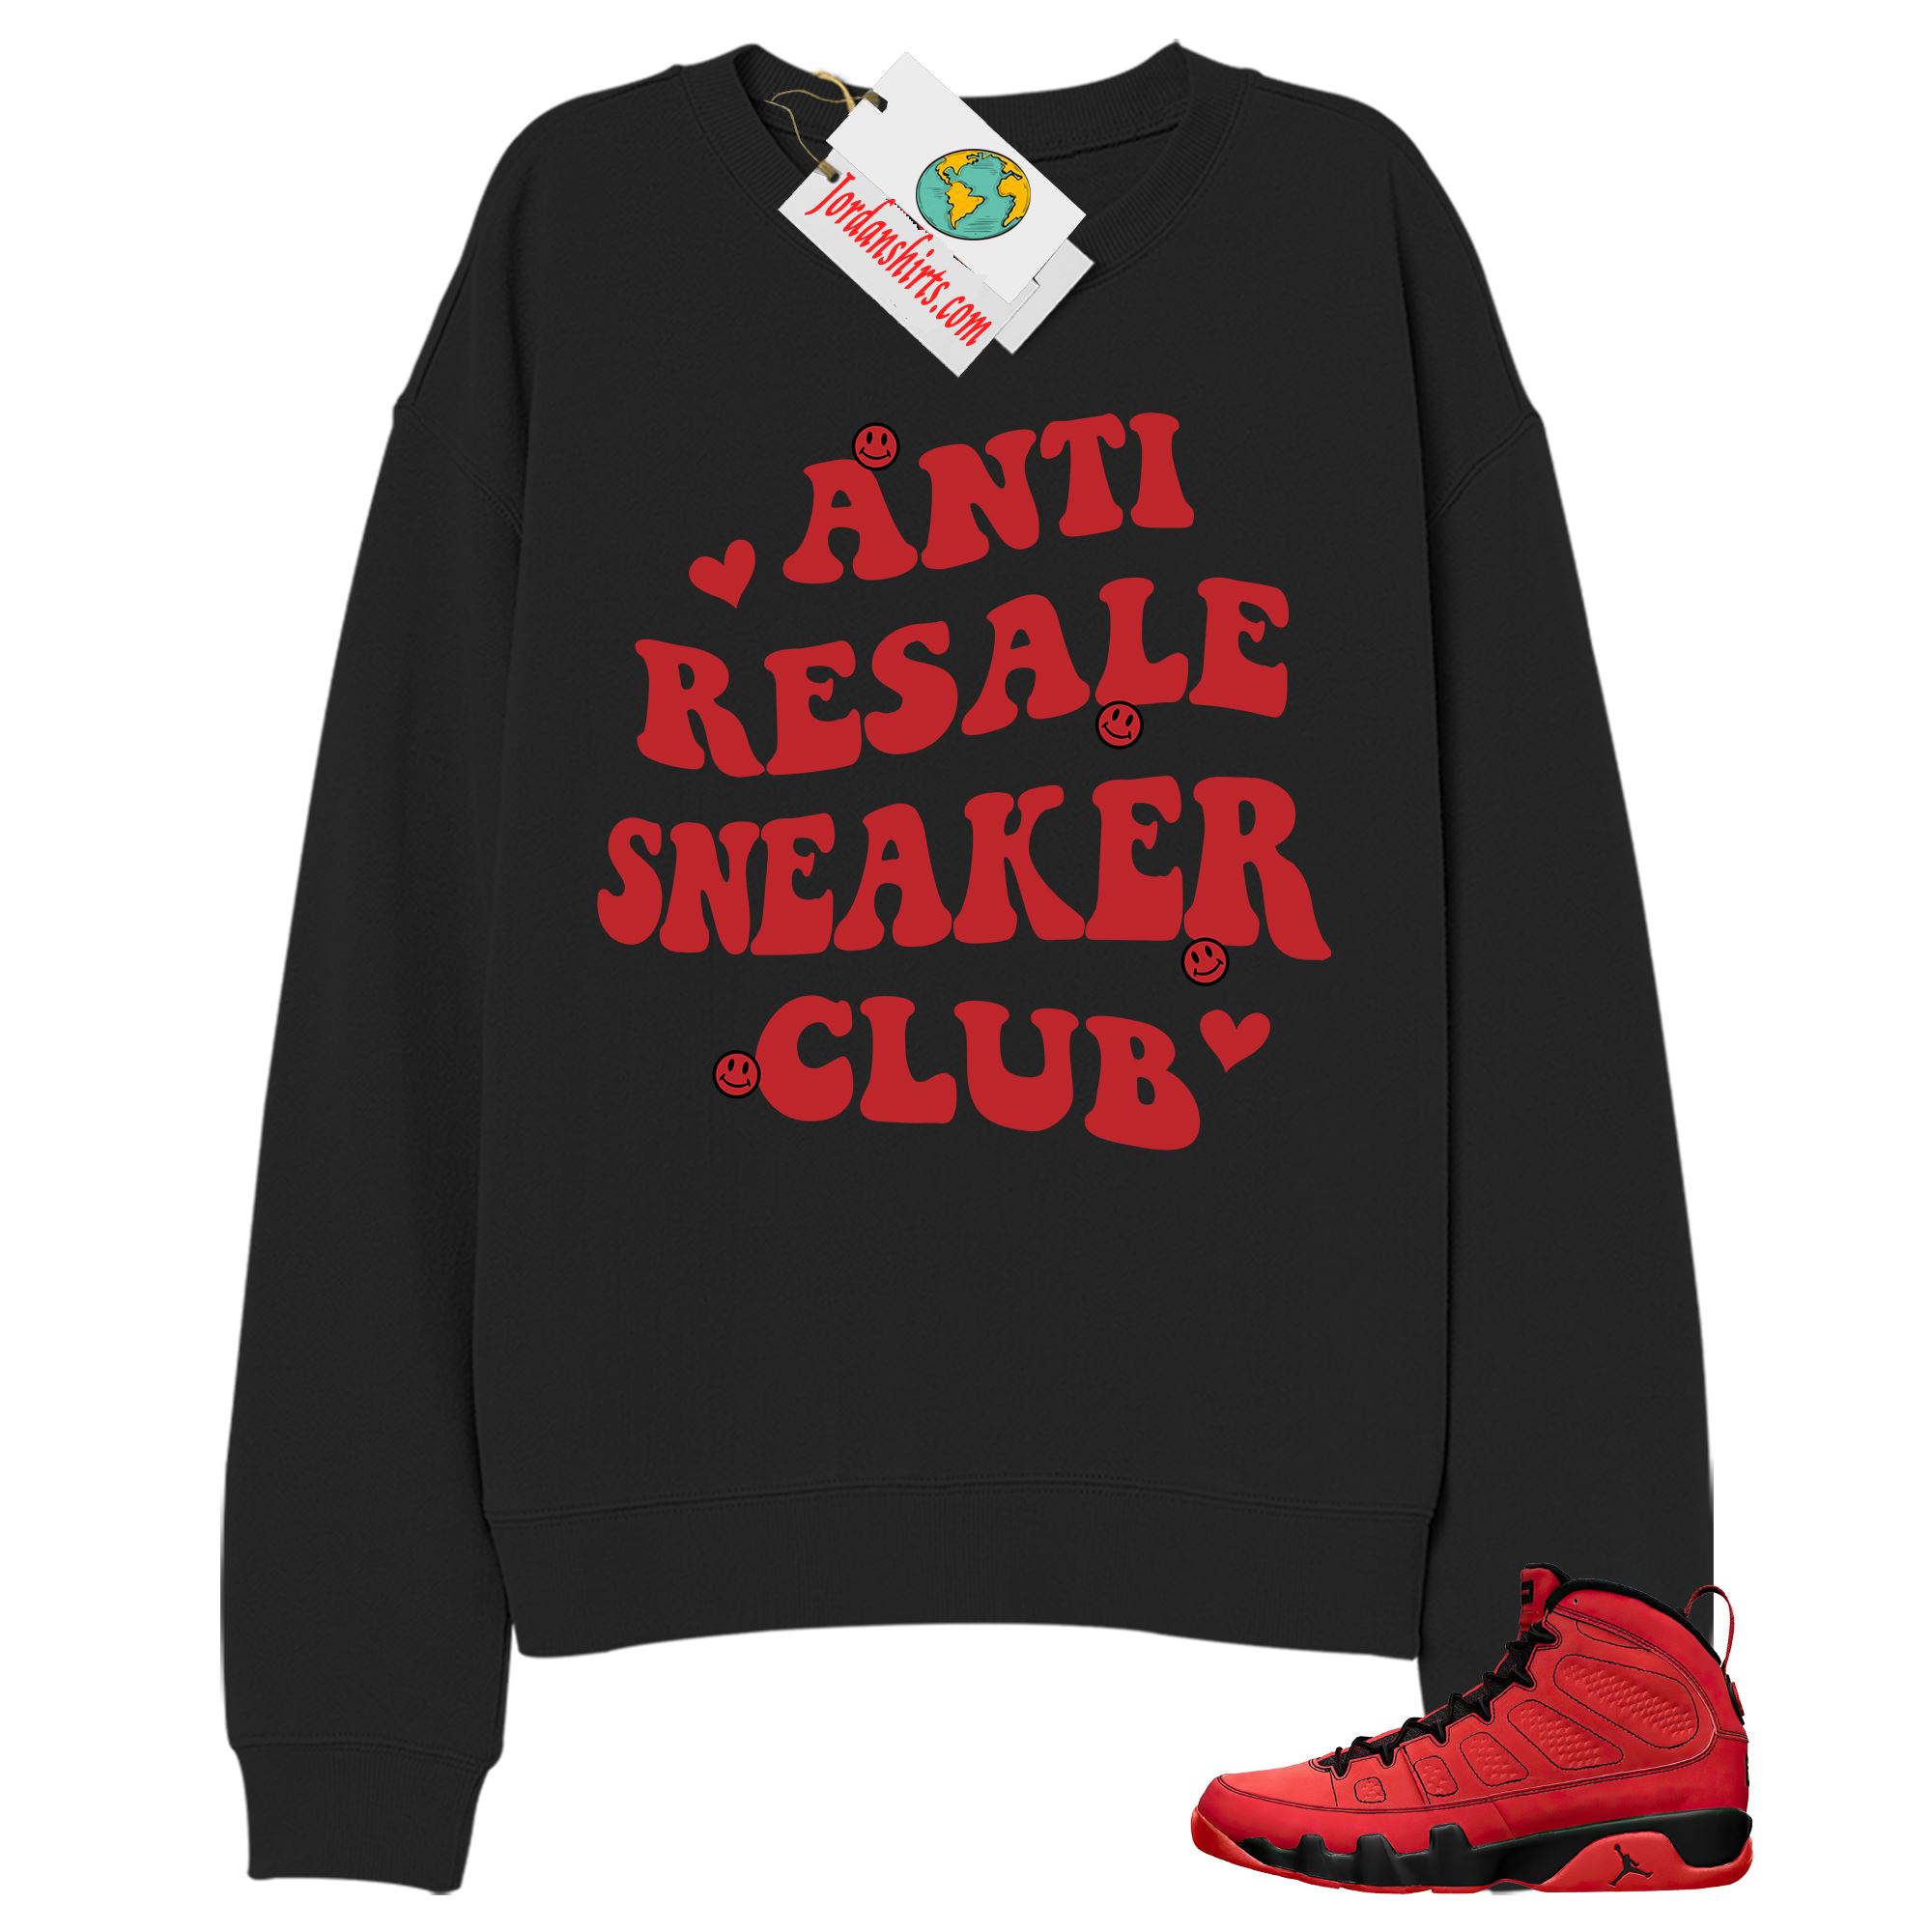 Jordan 9 Sweatshirt, Anti Resale Sneaker Club Black Sweatshirt Air Jordan 9 Chile Red 9s Size Up To 5xl